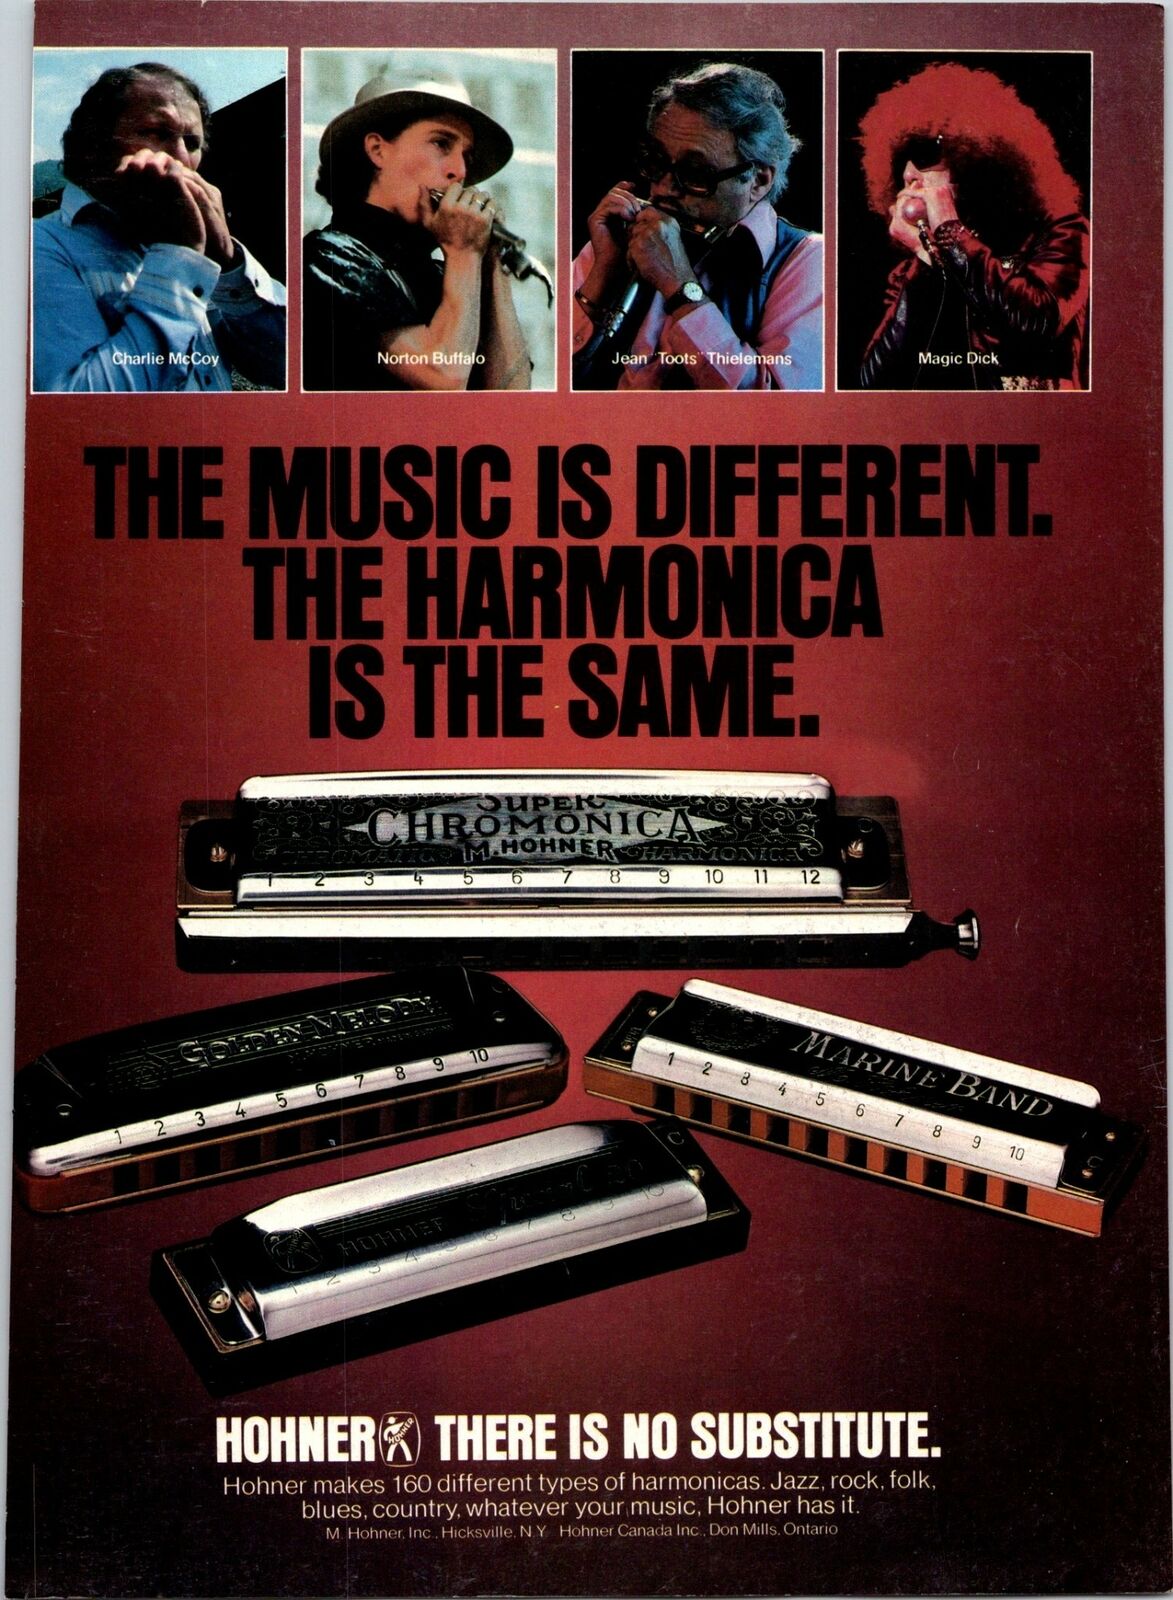 1980 VINTAGE 8X11 PRINT AD FOR HOHNER HARMONICAS CHARLIE McCOY,NORTON BUFFALO++